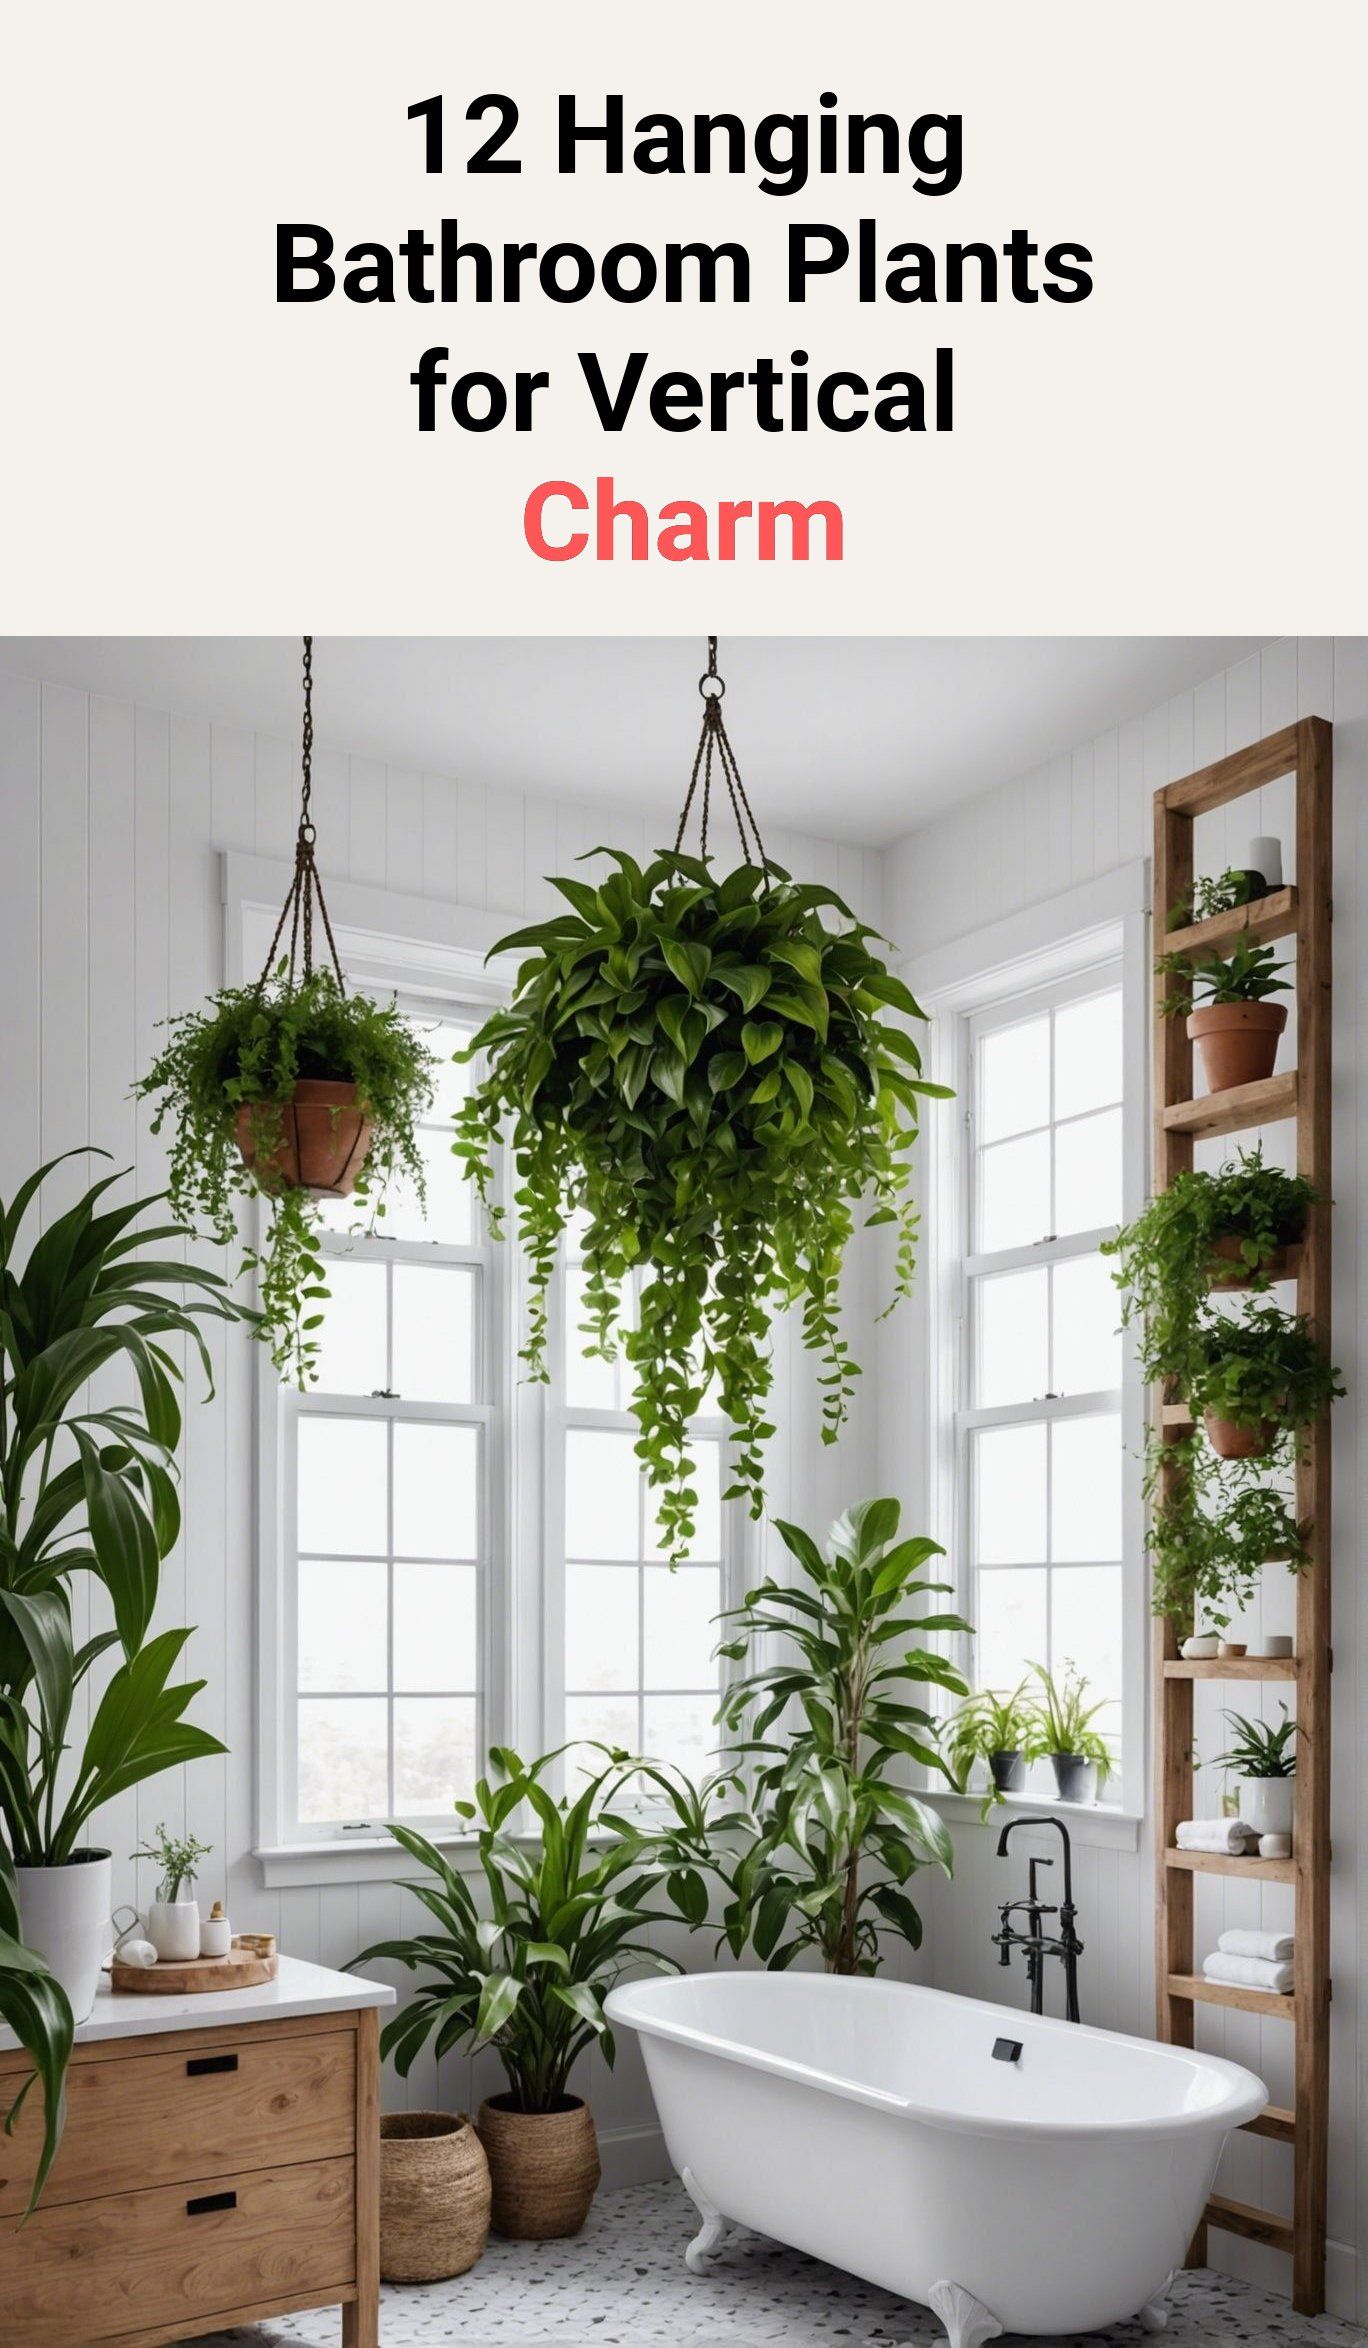 12 Hanging Bathroom Plants for Vertical Charm